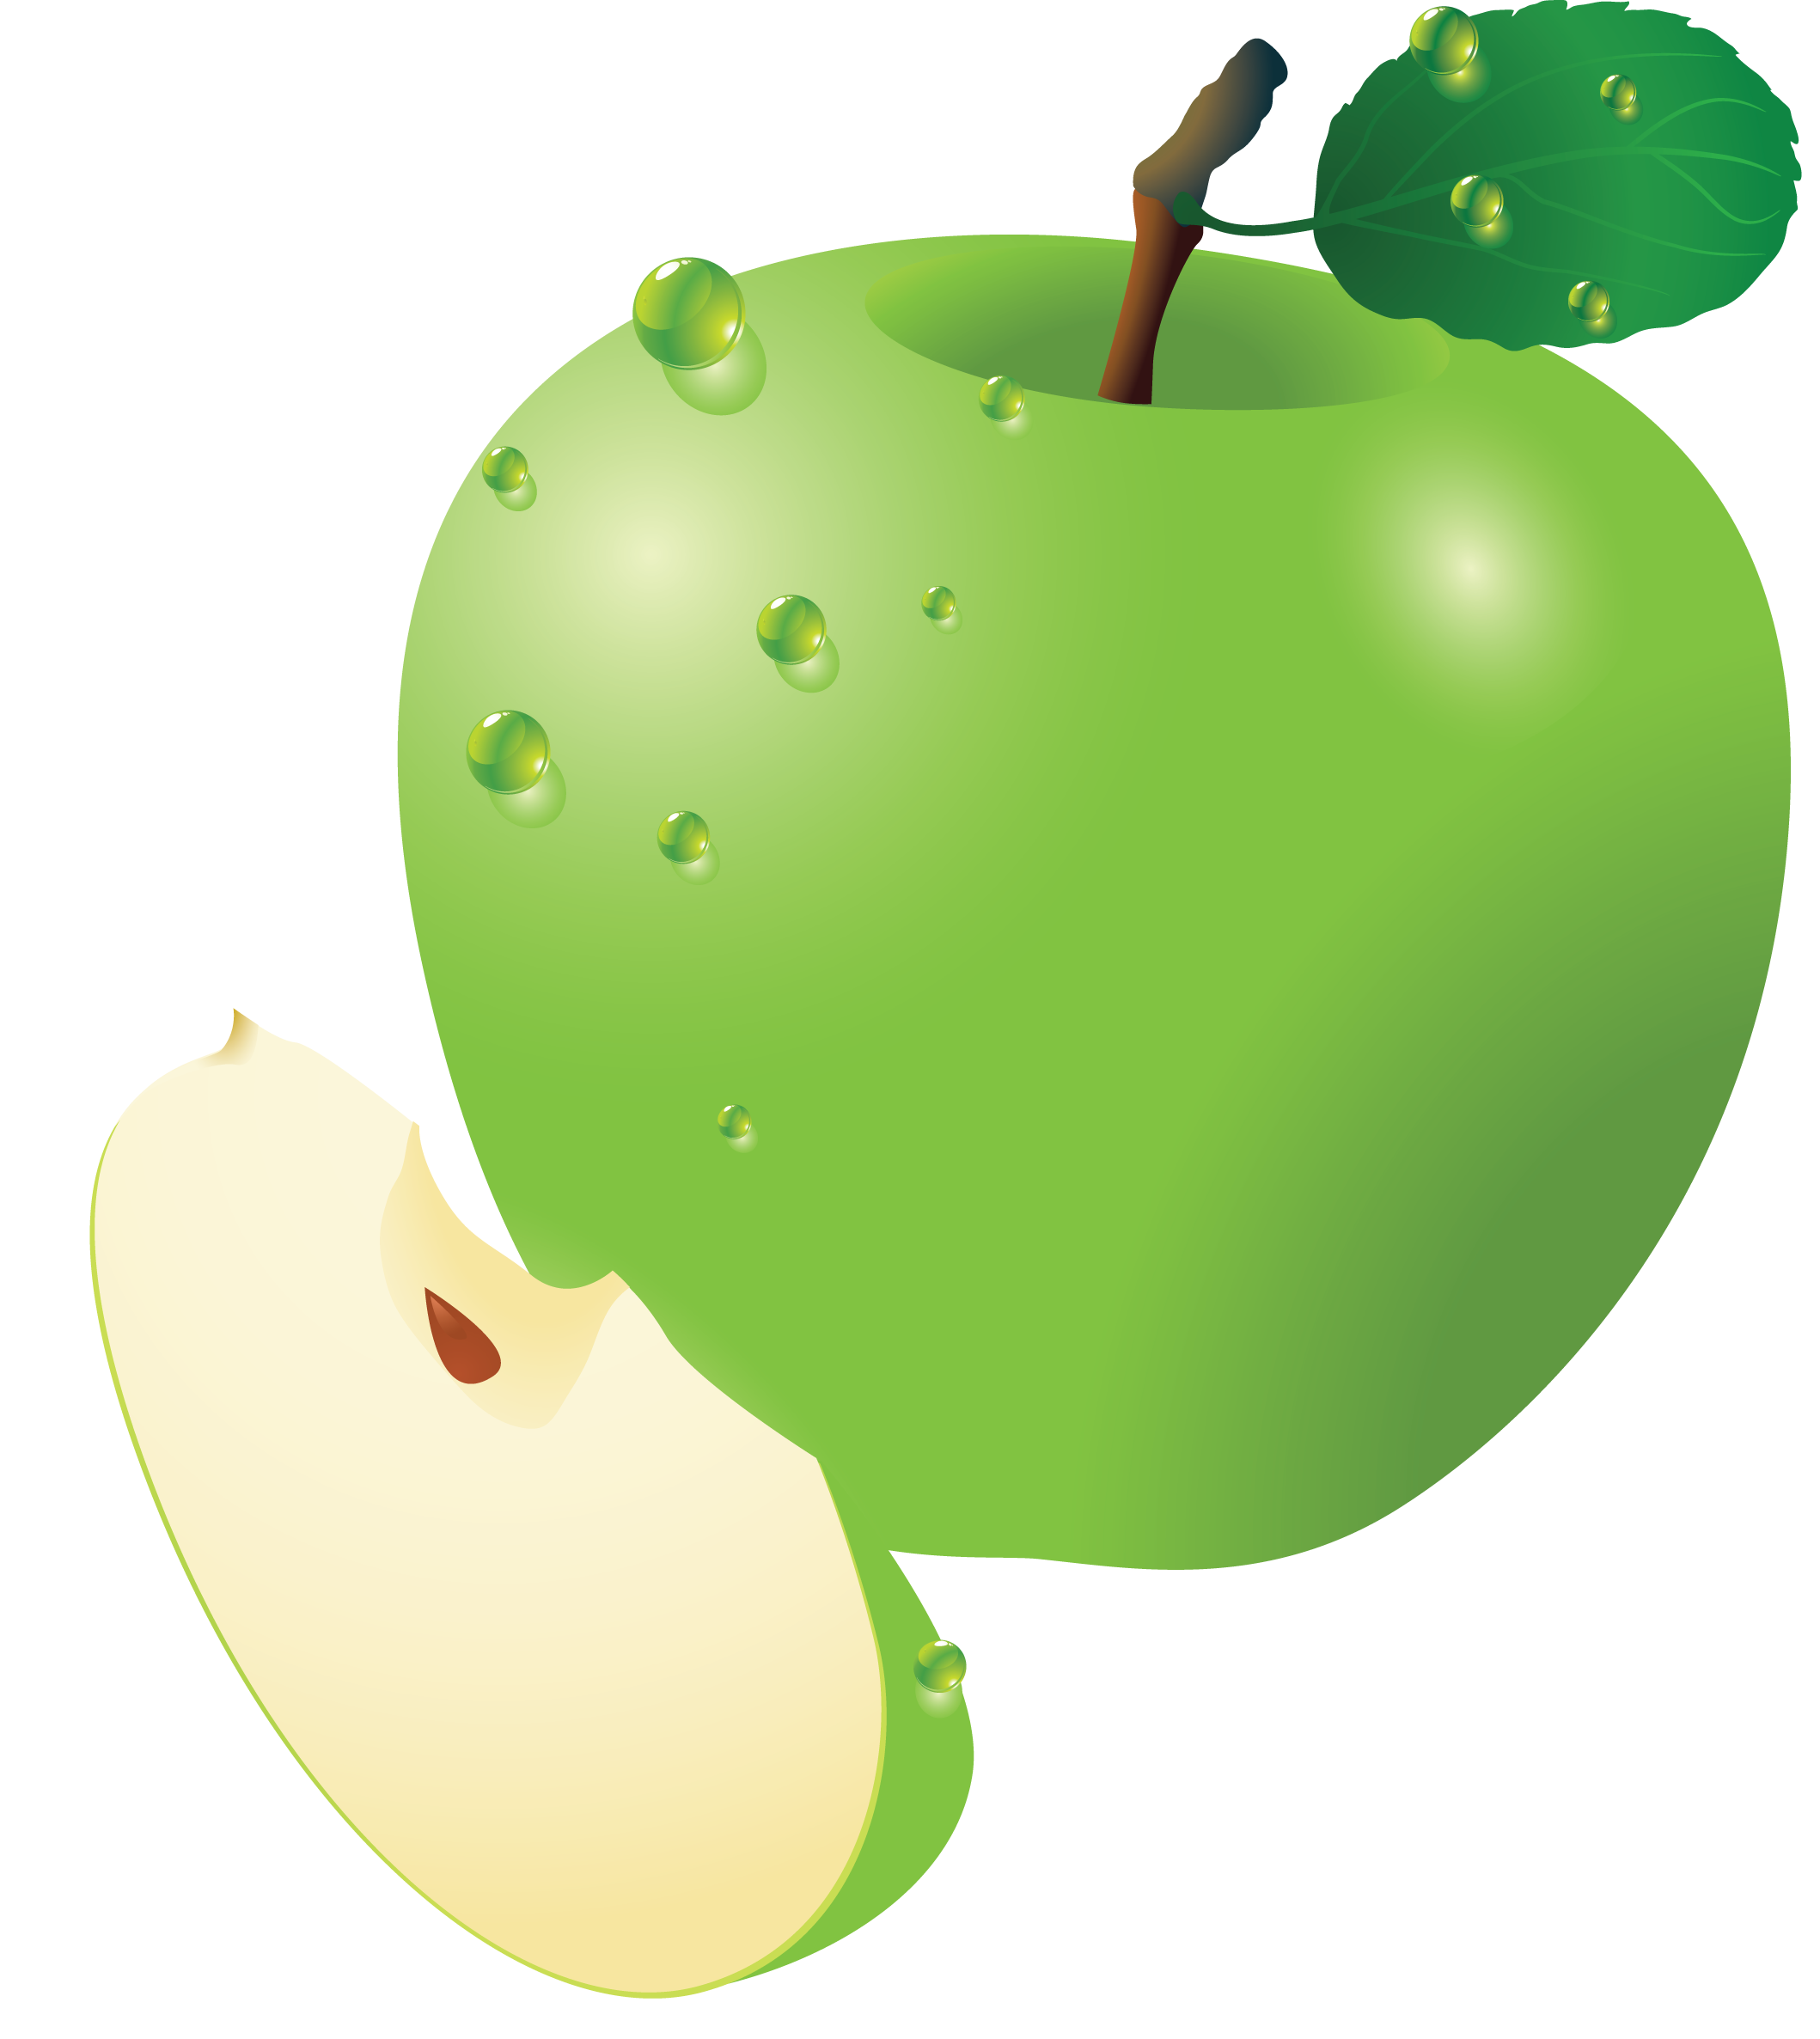 green apple's